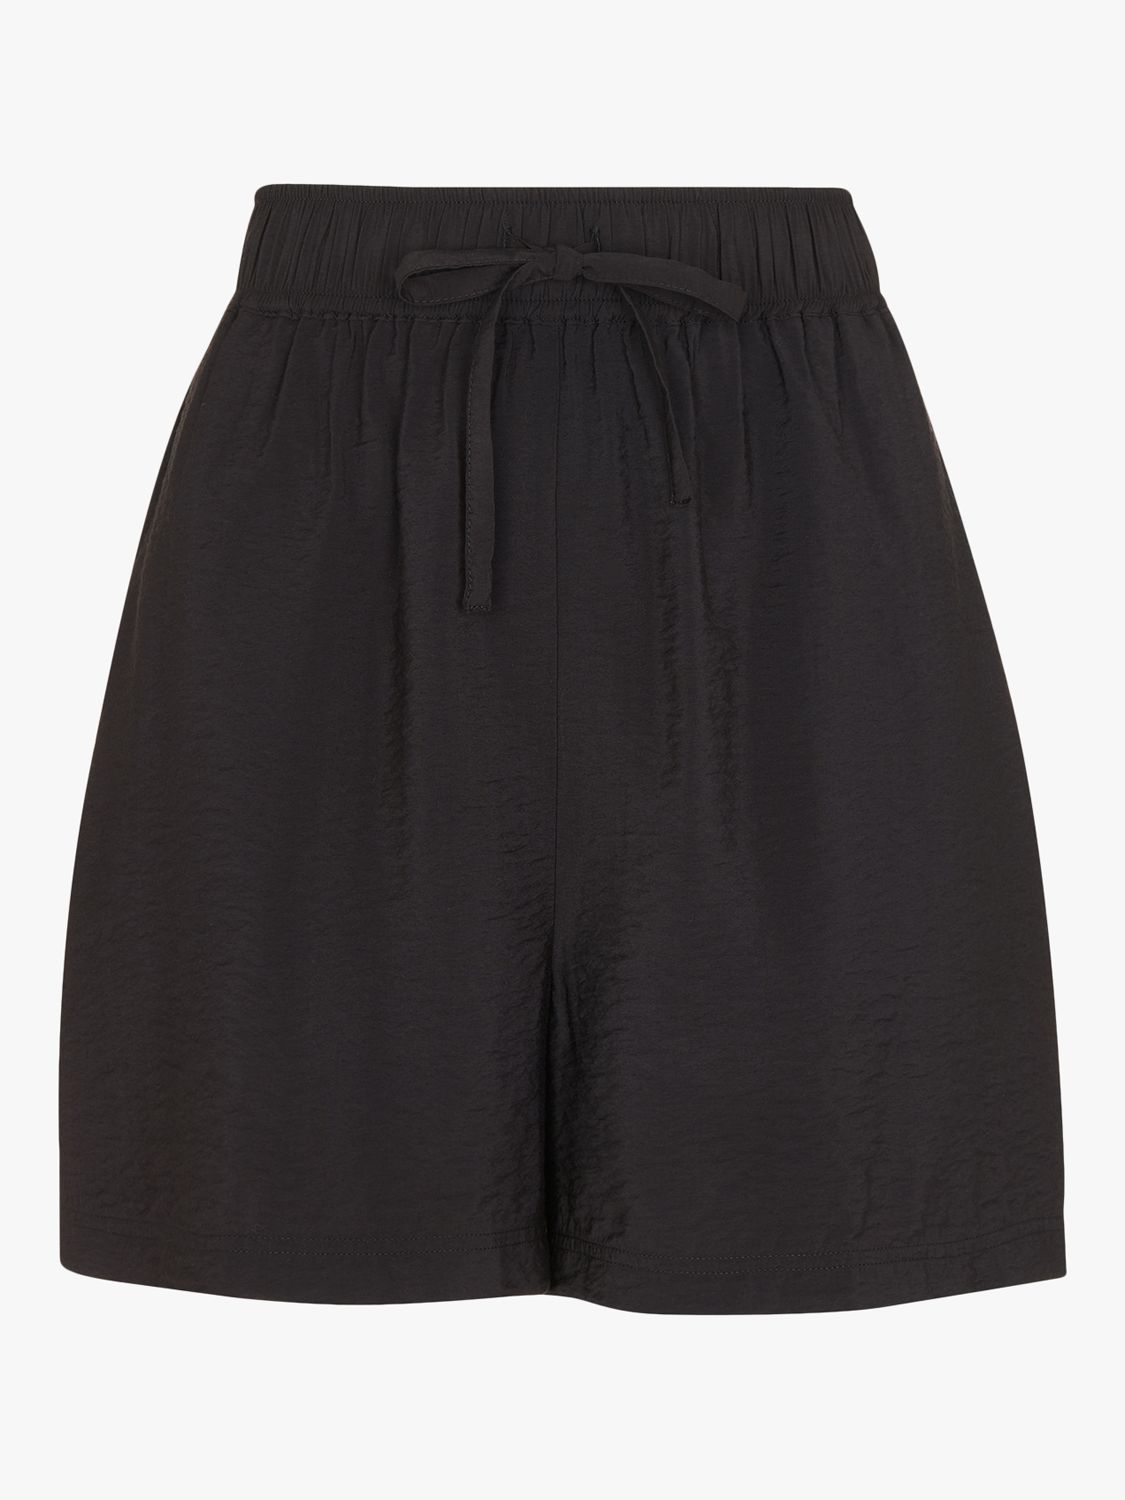 Whistles Nicola Elasticated Waist Plain Shorts, Black, 10